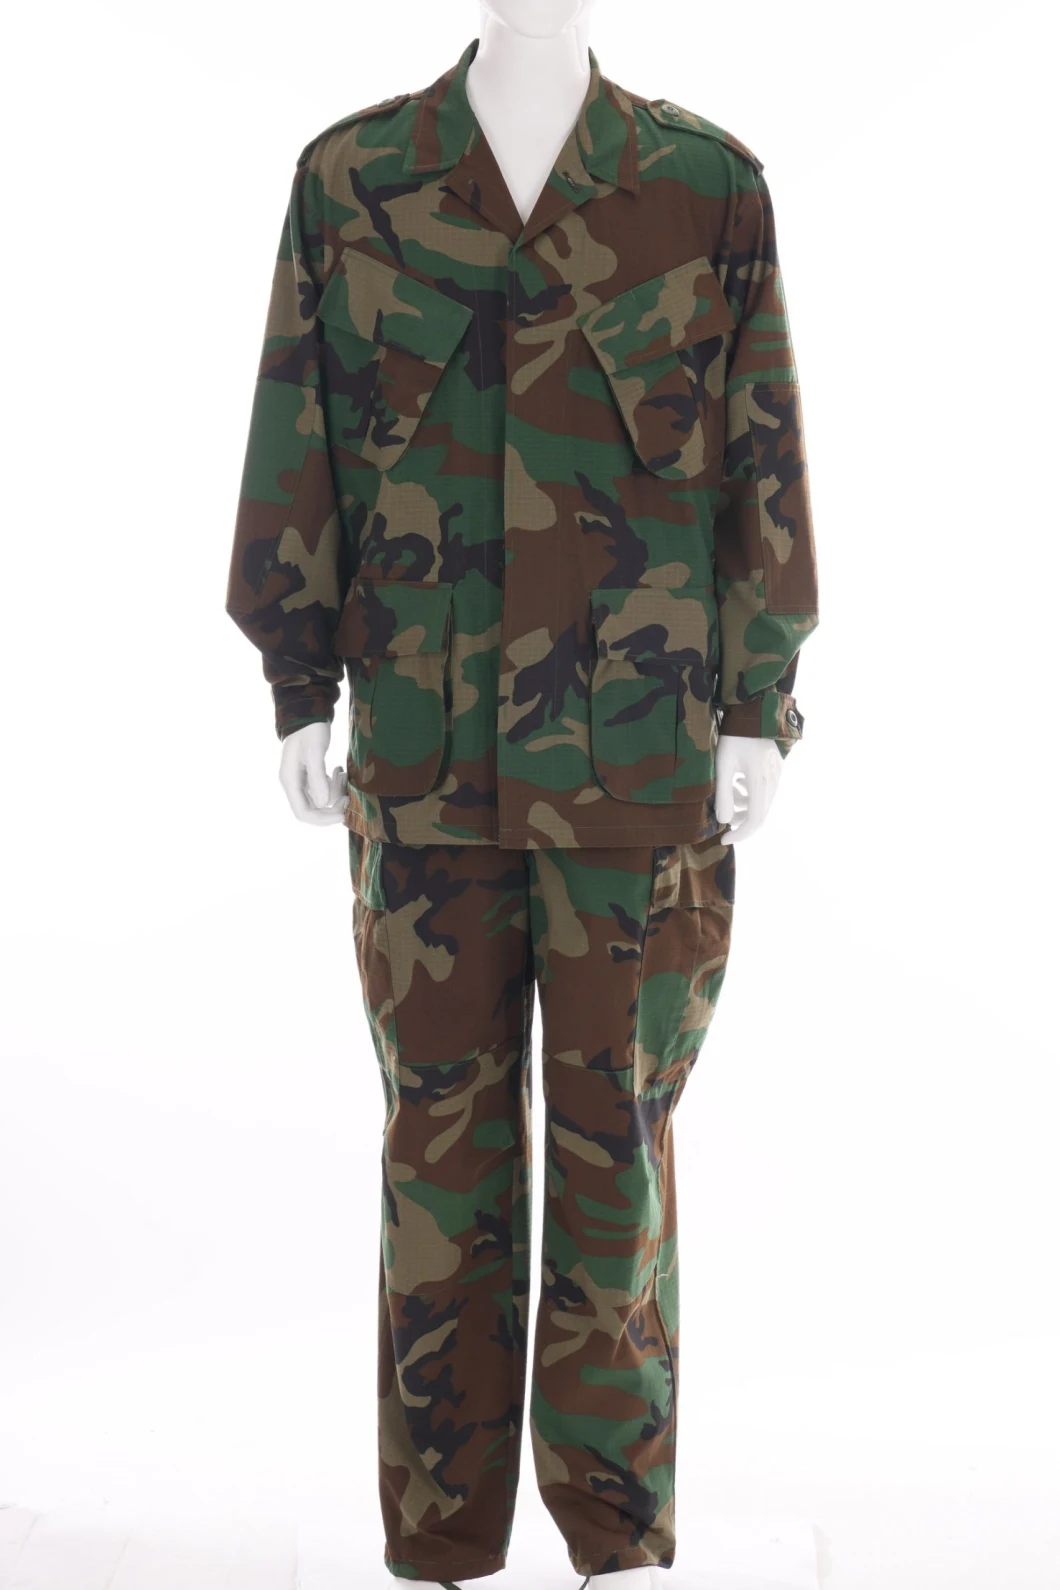 Policia Uniform/Military Uniform/Bdu Uniform/Acu Uniform/Ripstop Uniform